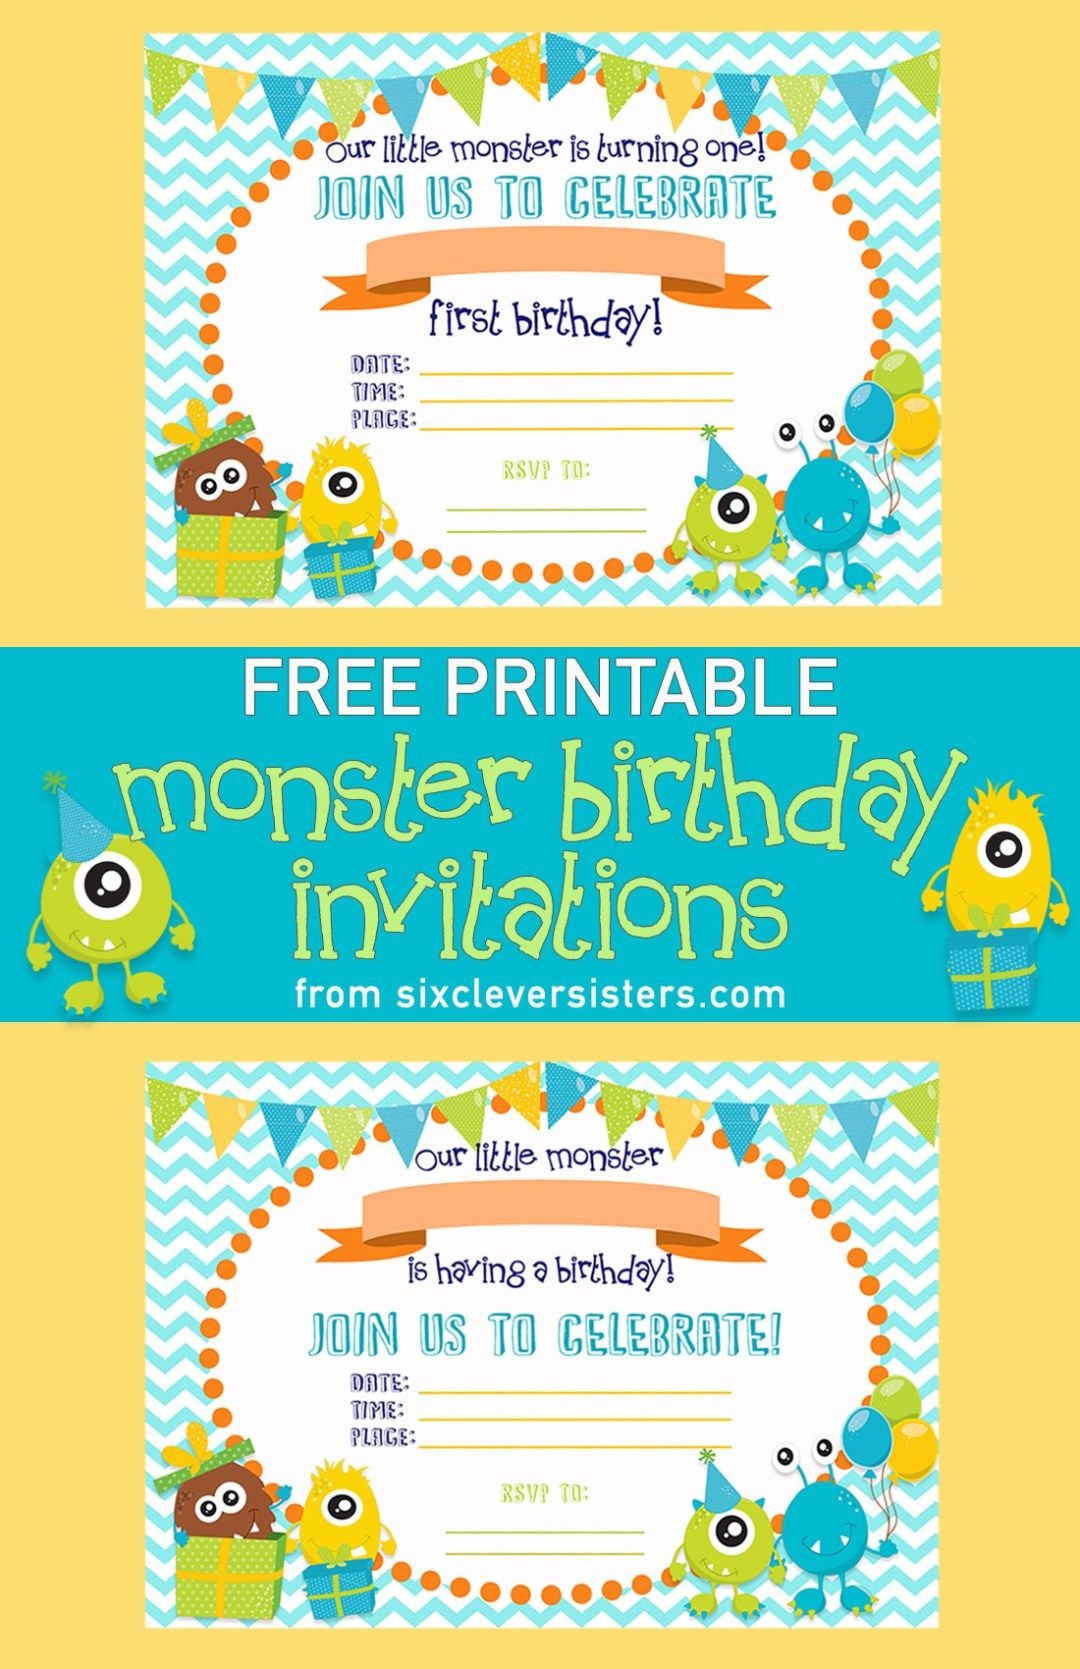 Free Printable Monster Birthday Invitations | Birthday One | Pinterest - Free Printable Birthday Invitations Pinterest